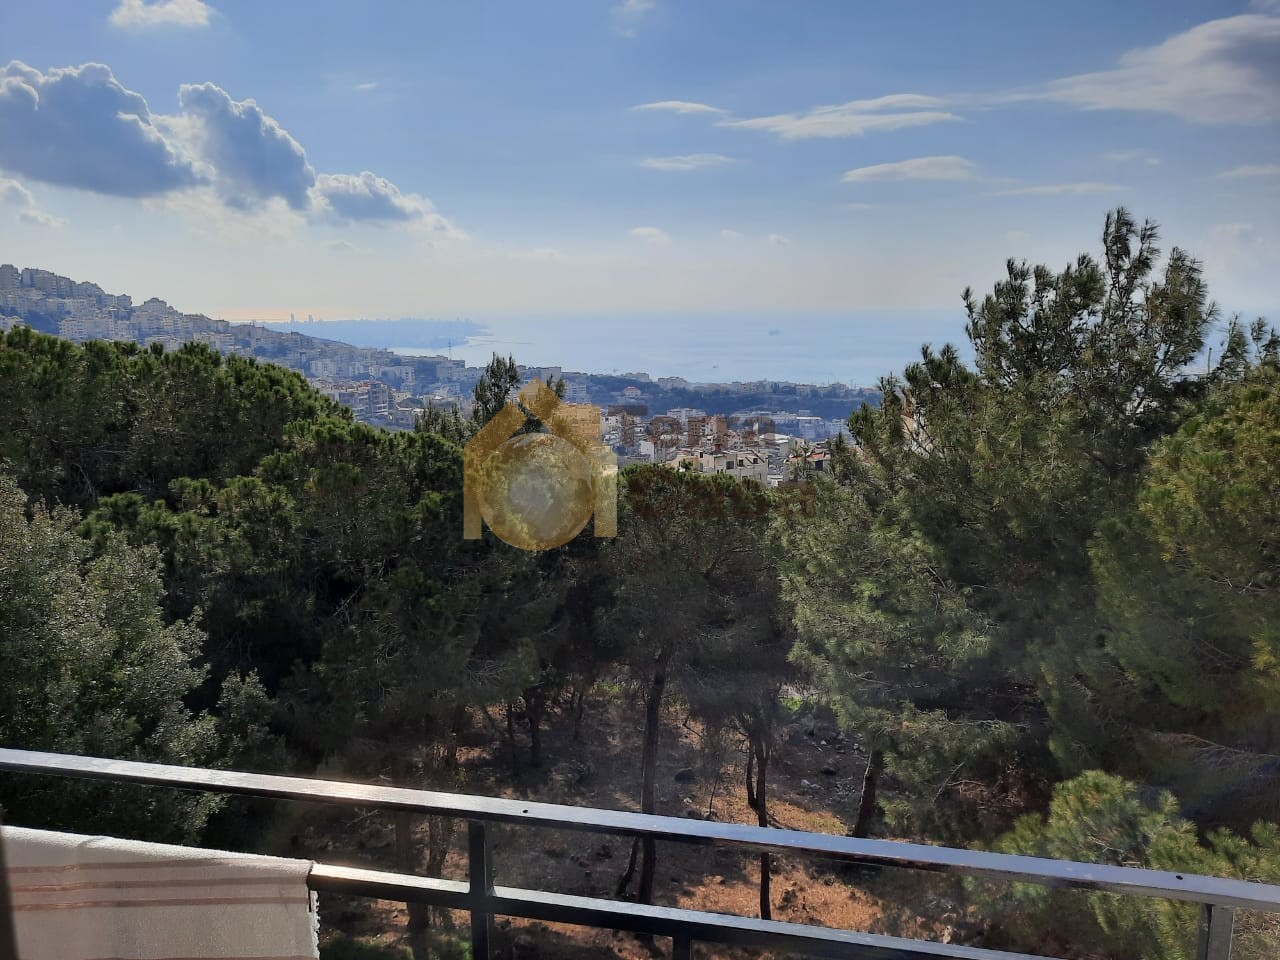 Sale villa Kornet Chehwan with panoramic view